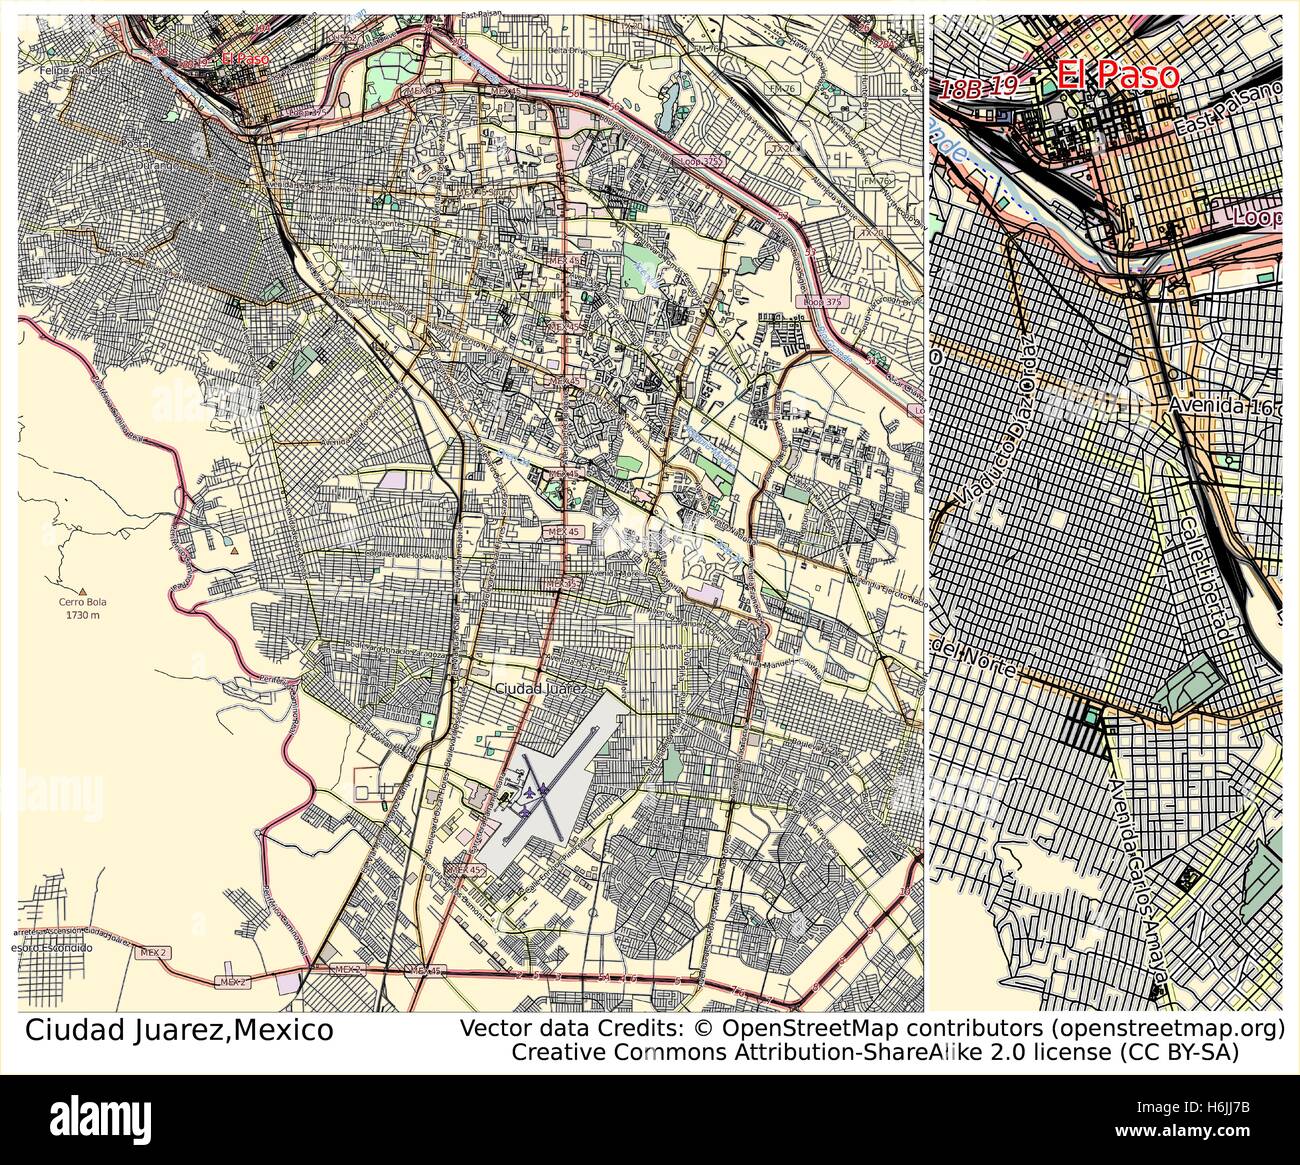 Ciudad Juarez Mexico City Map Stock Vector Art Illustration